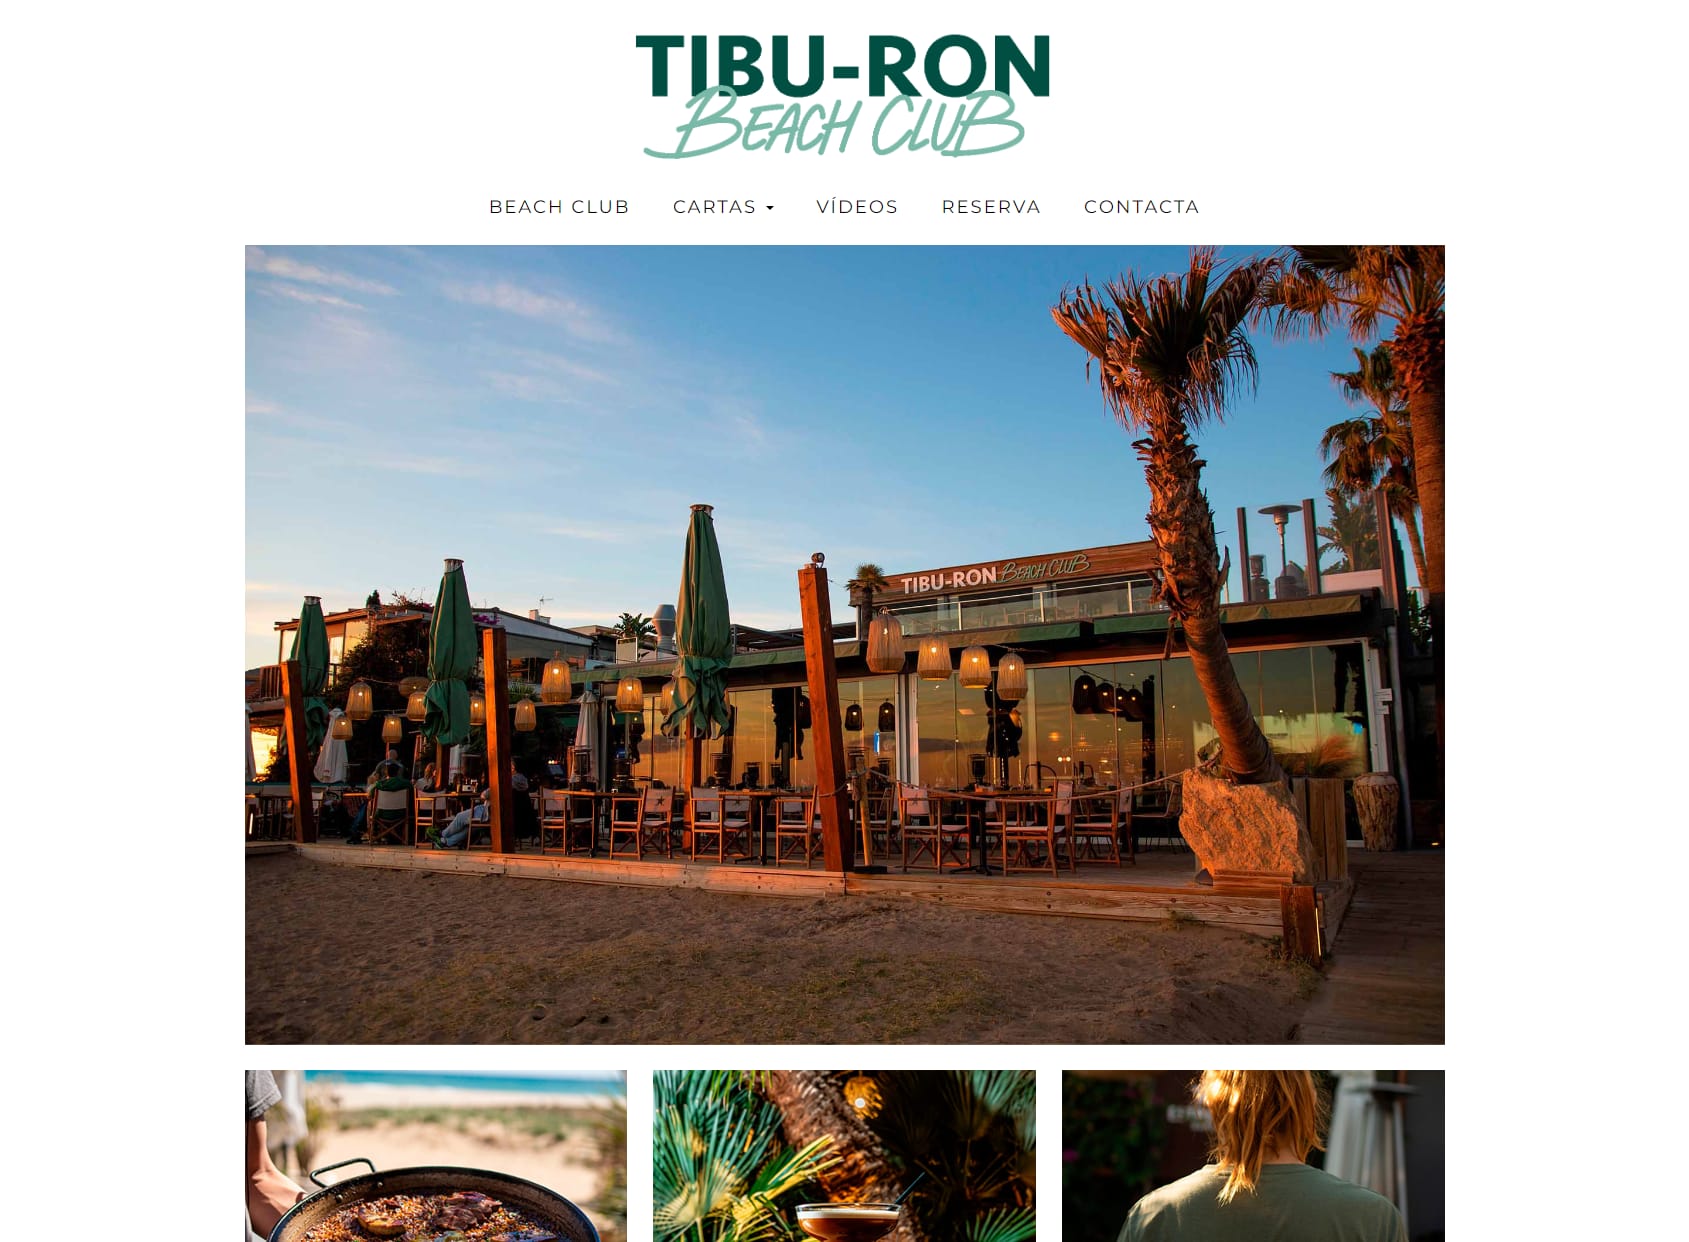 Tibu-Ron Beach Club